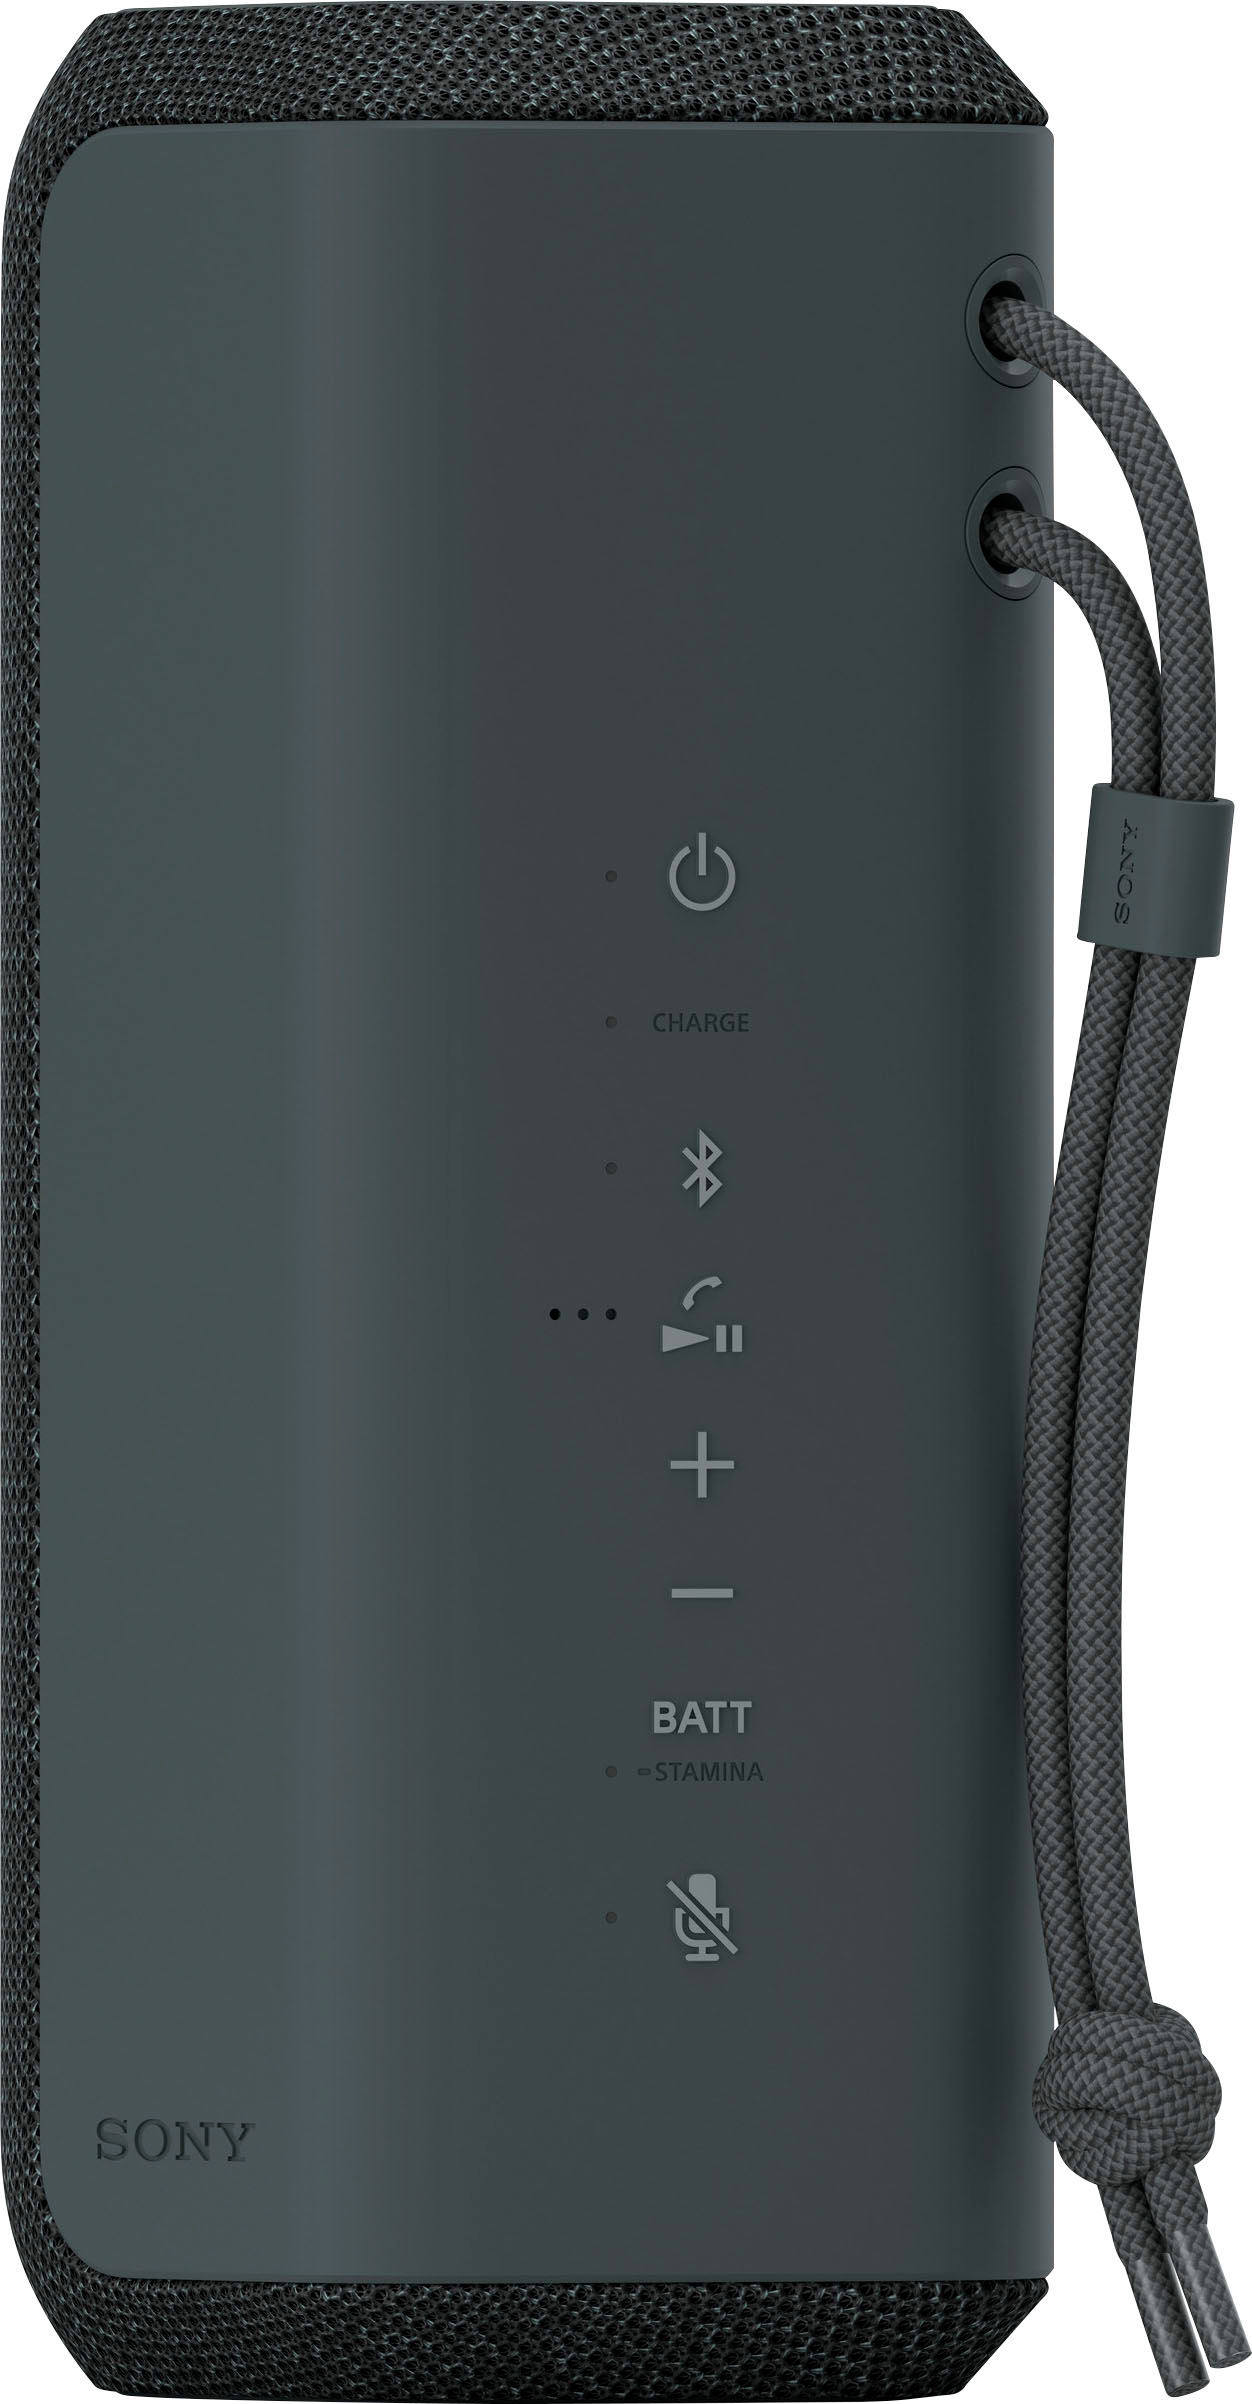 Sony XE200 Portable Waterproof and Dustproof Bluetooth Speaker 